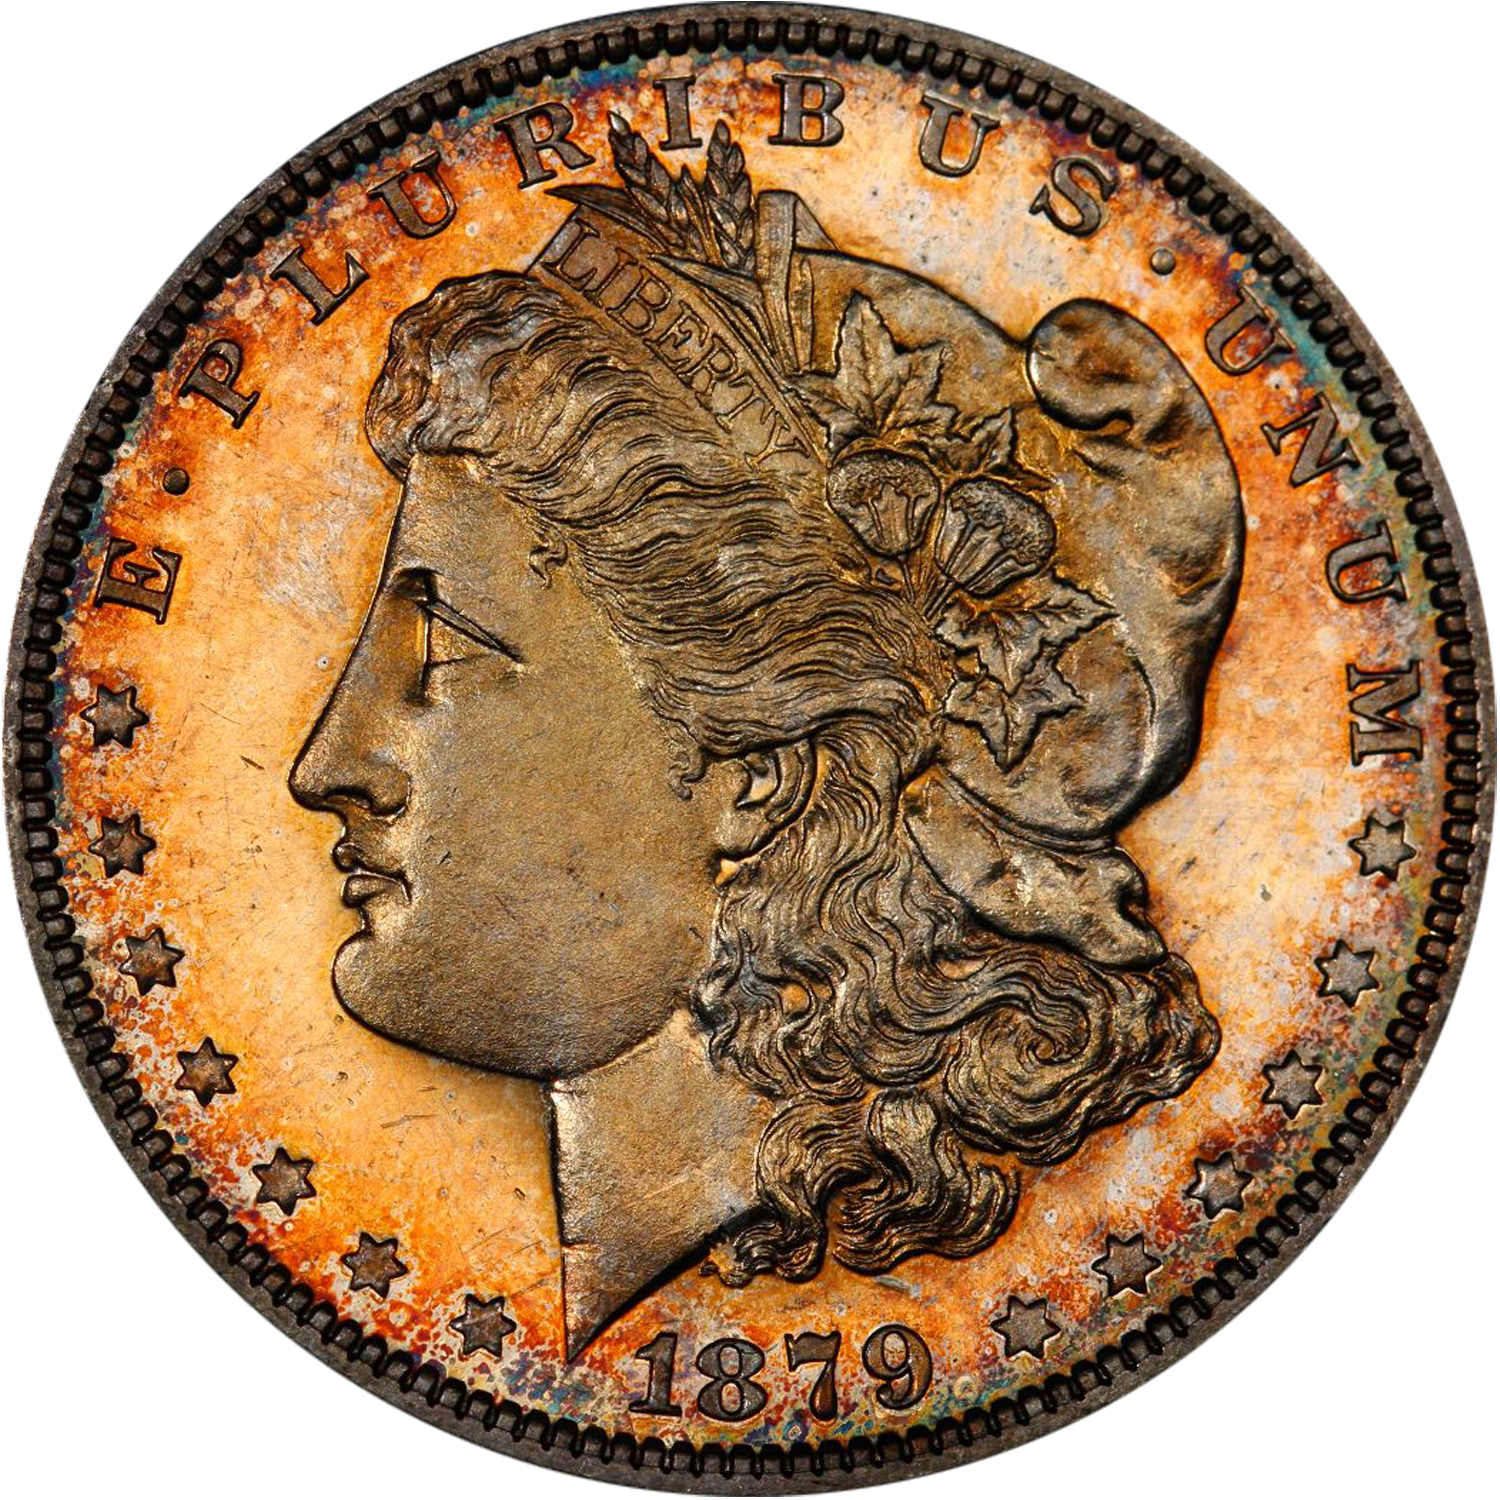 1879-o branch mint proof morgan silver dollar